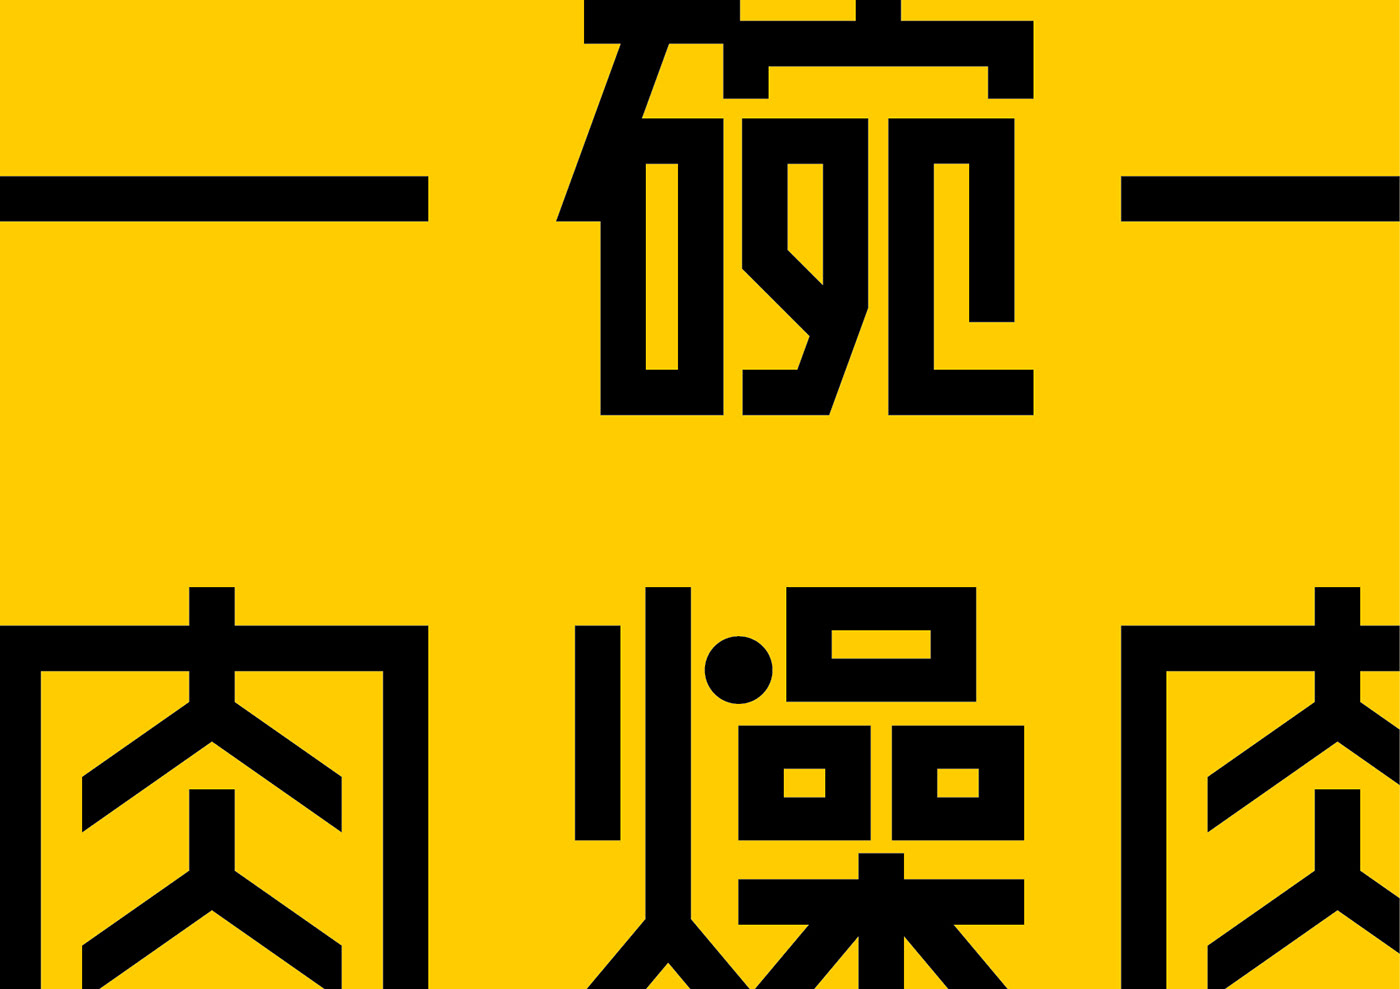 taiwanese restaurant characters yelolow Food  branding  graphic design  logo